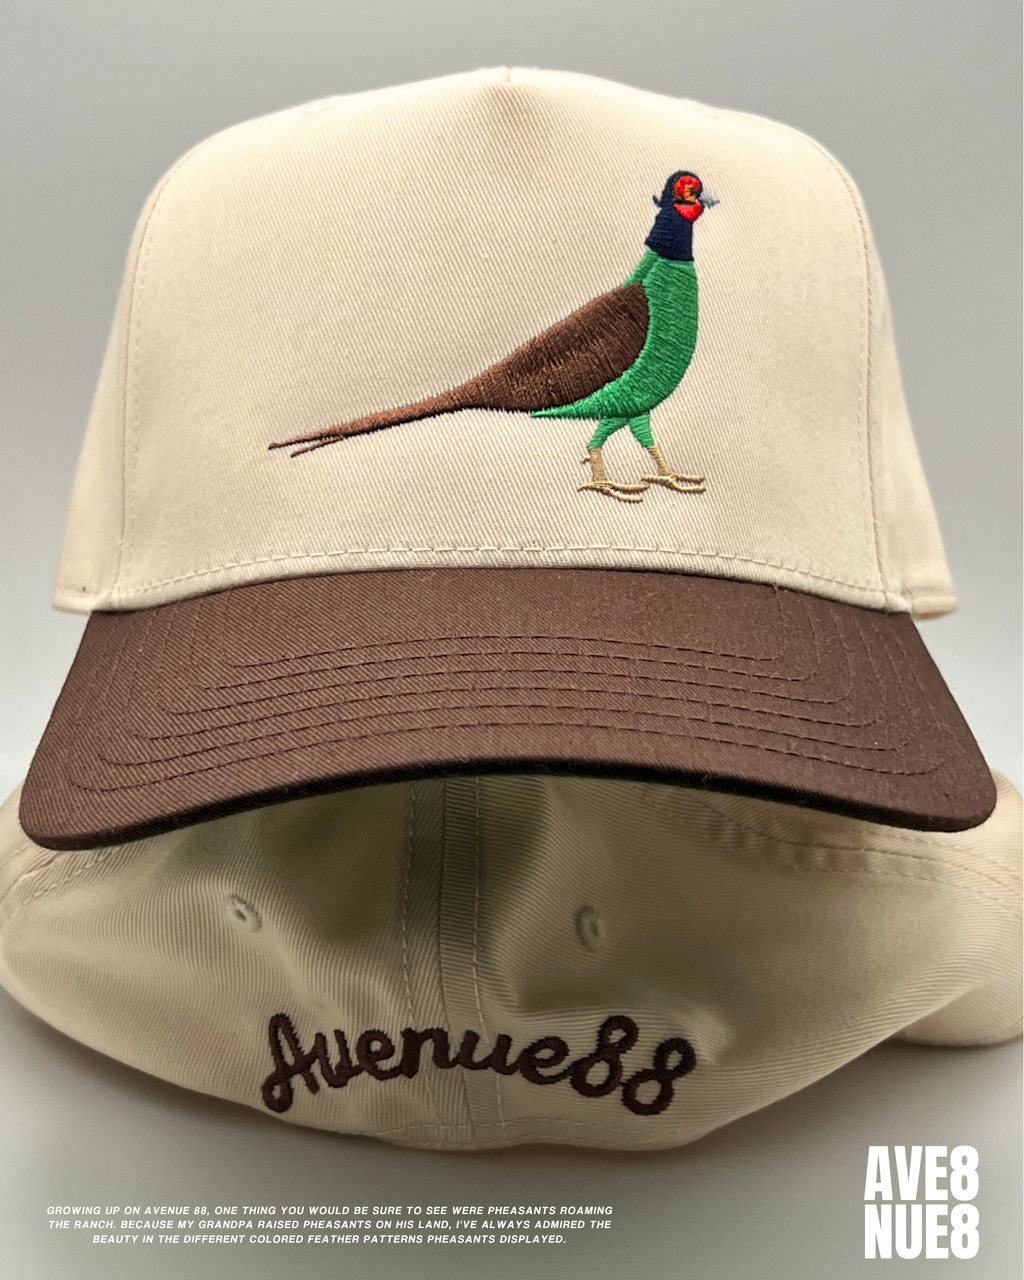 Pheasant mascot baseball cap